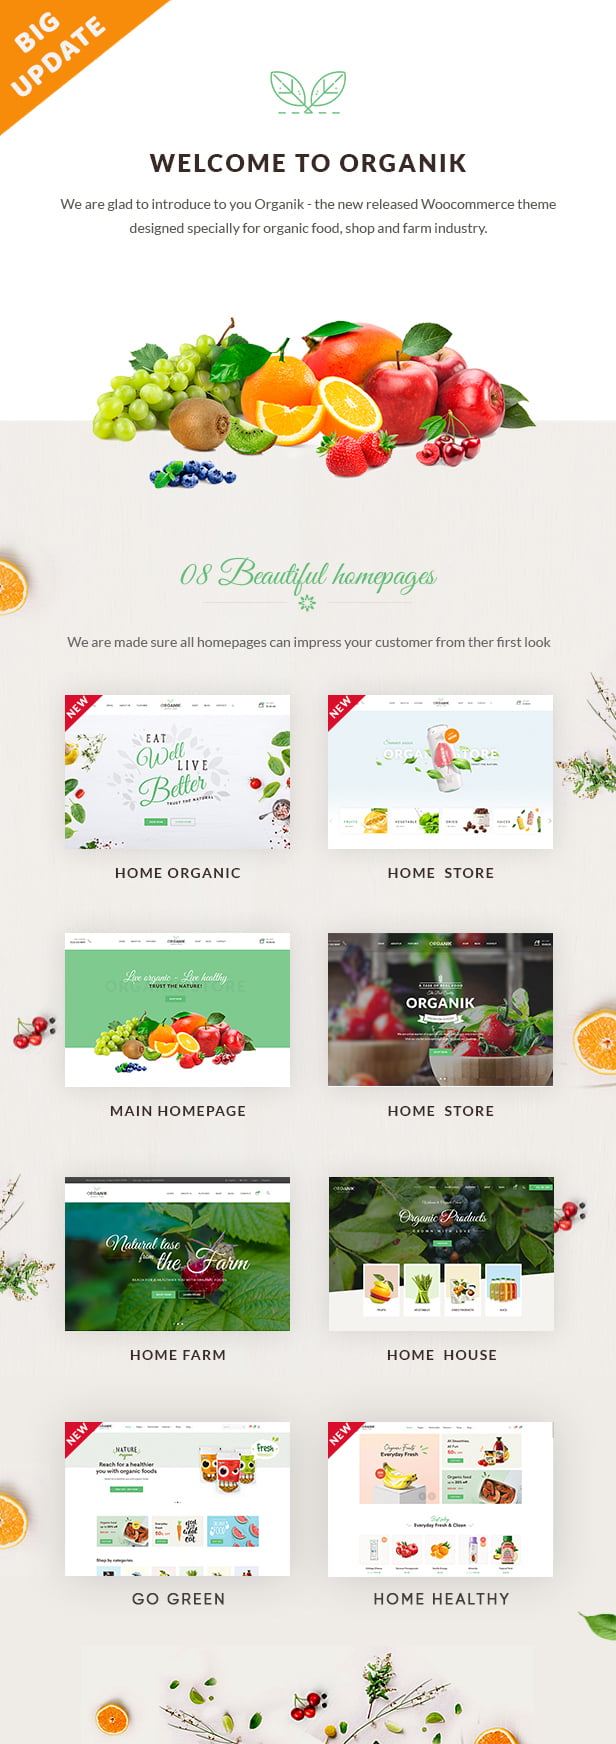 1592815749 898 Organic Food Store WordPress Theme Organik by ThemeMove